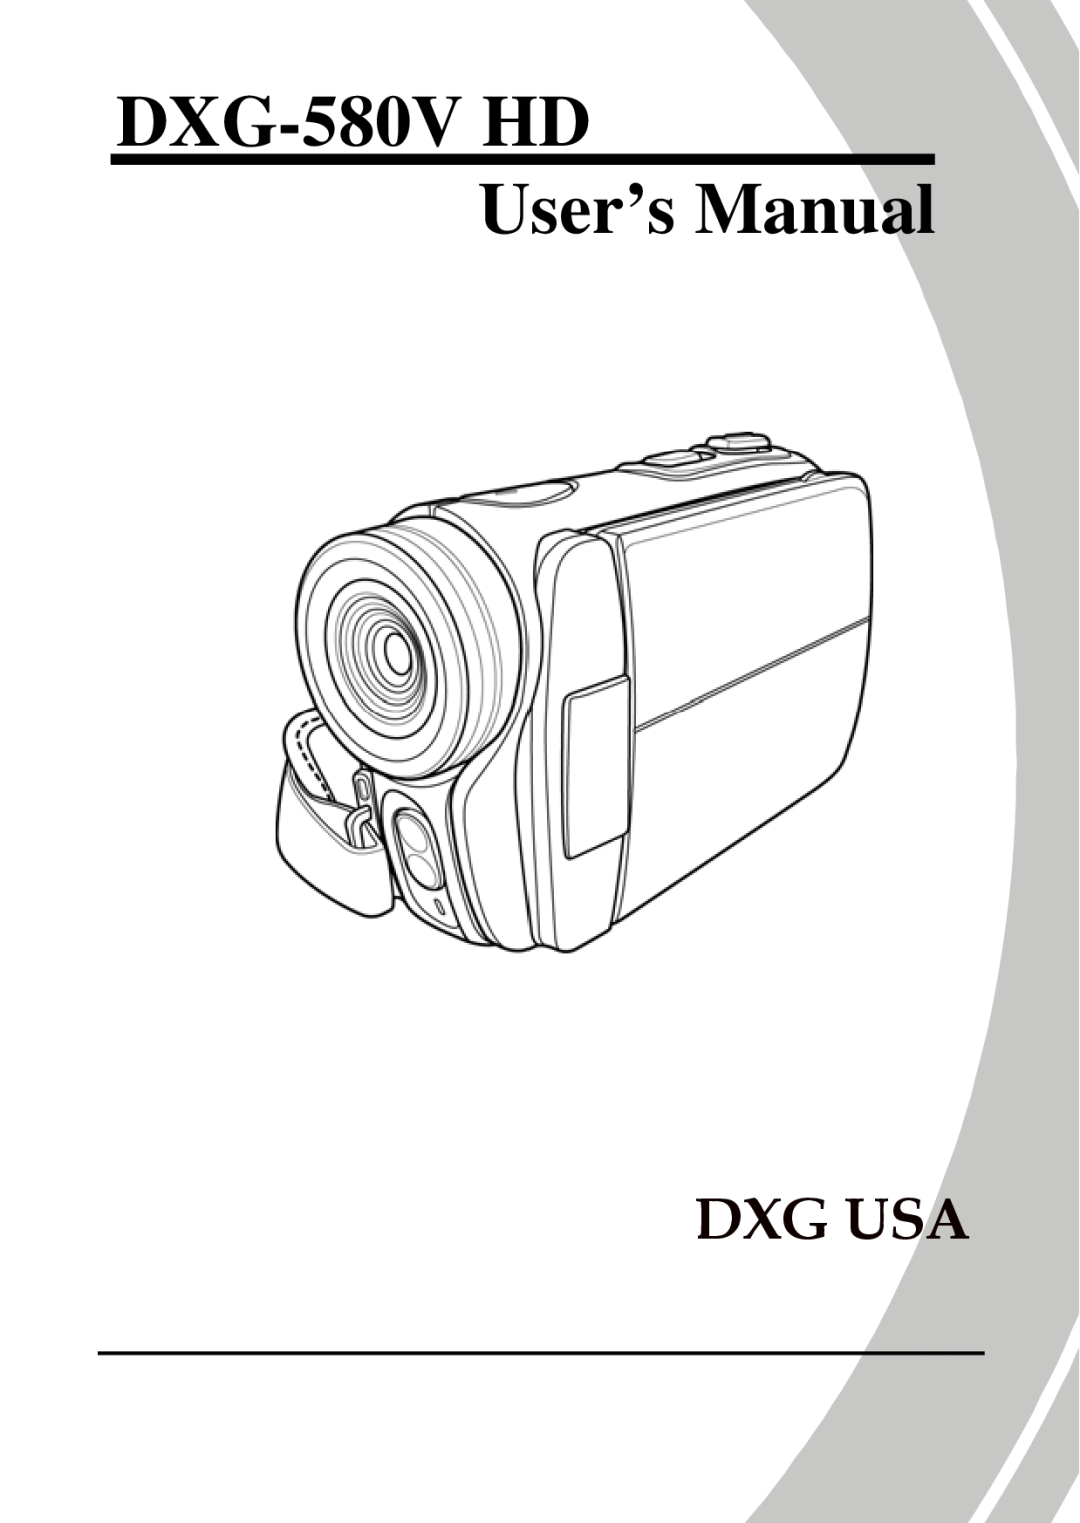 DXG Technology manual DXG-580V HD User’s Manual, Dxg Usa 